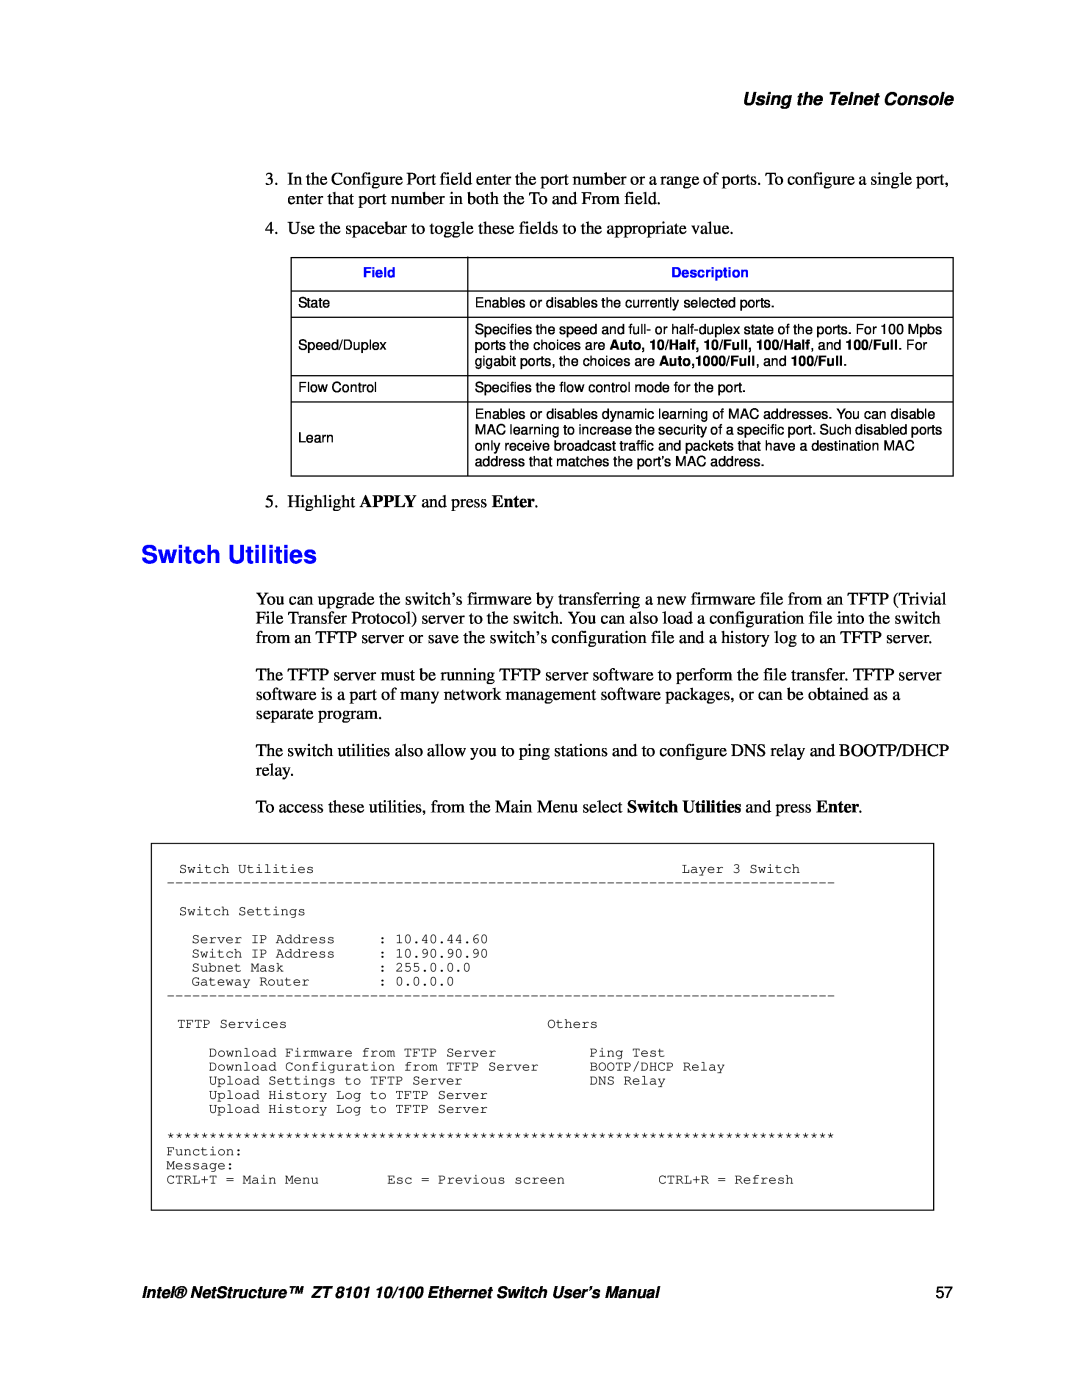 Intel ZT 8101 10/100 user manual Switch Utilities, Using the Telnet Console 